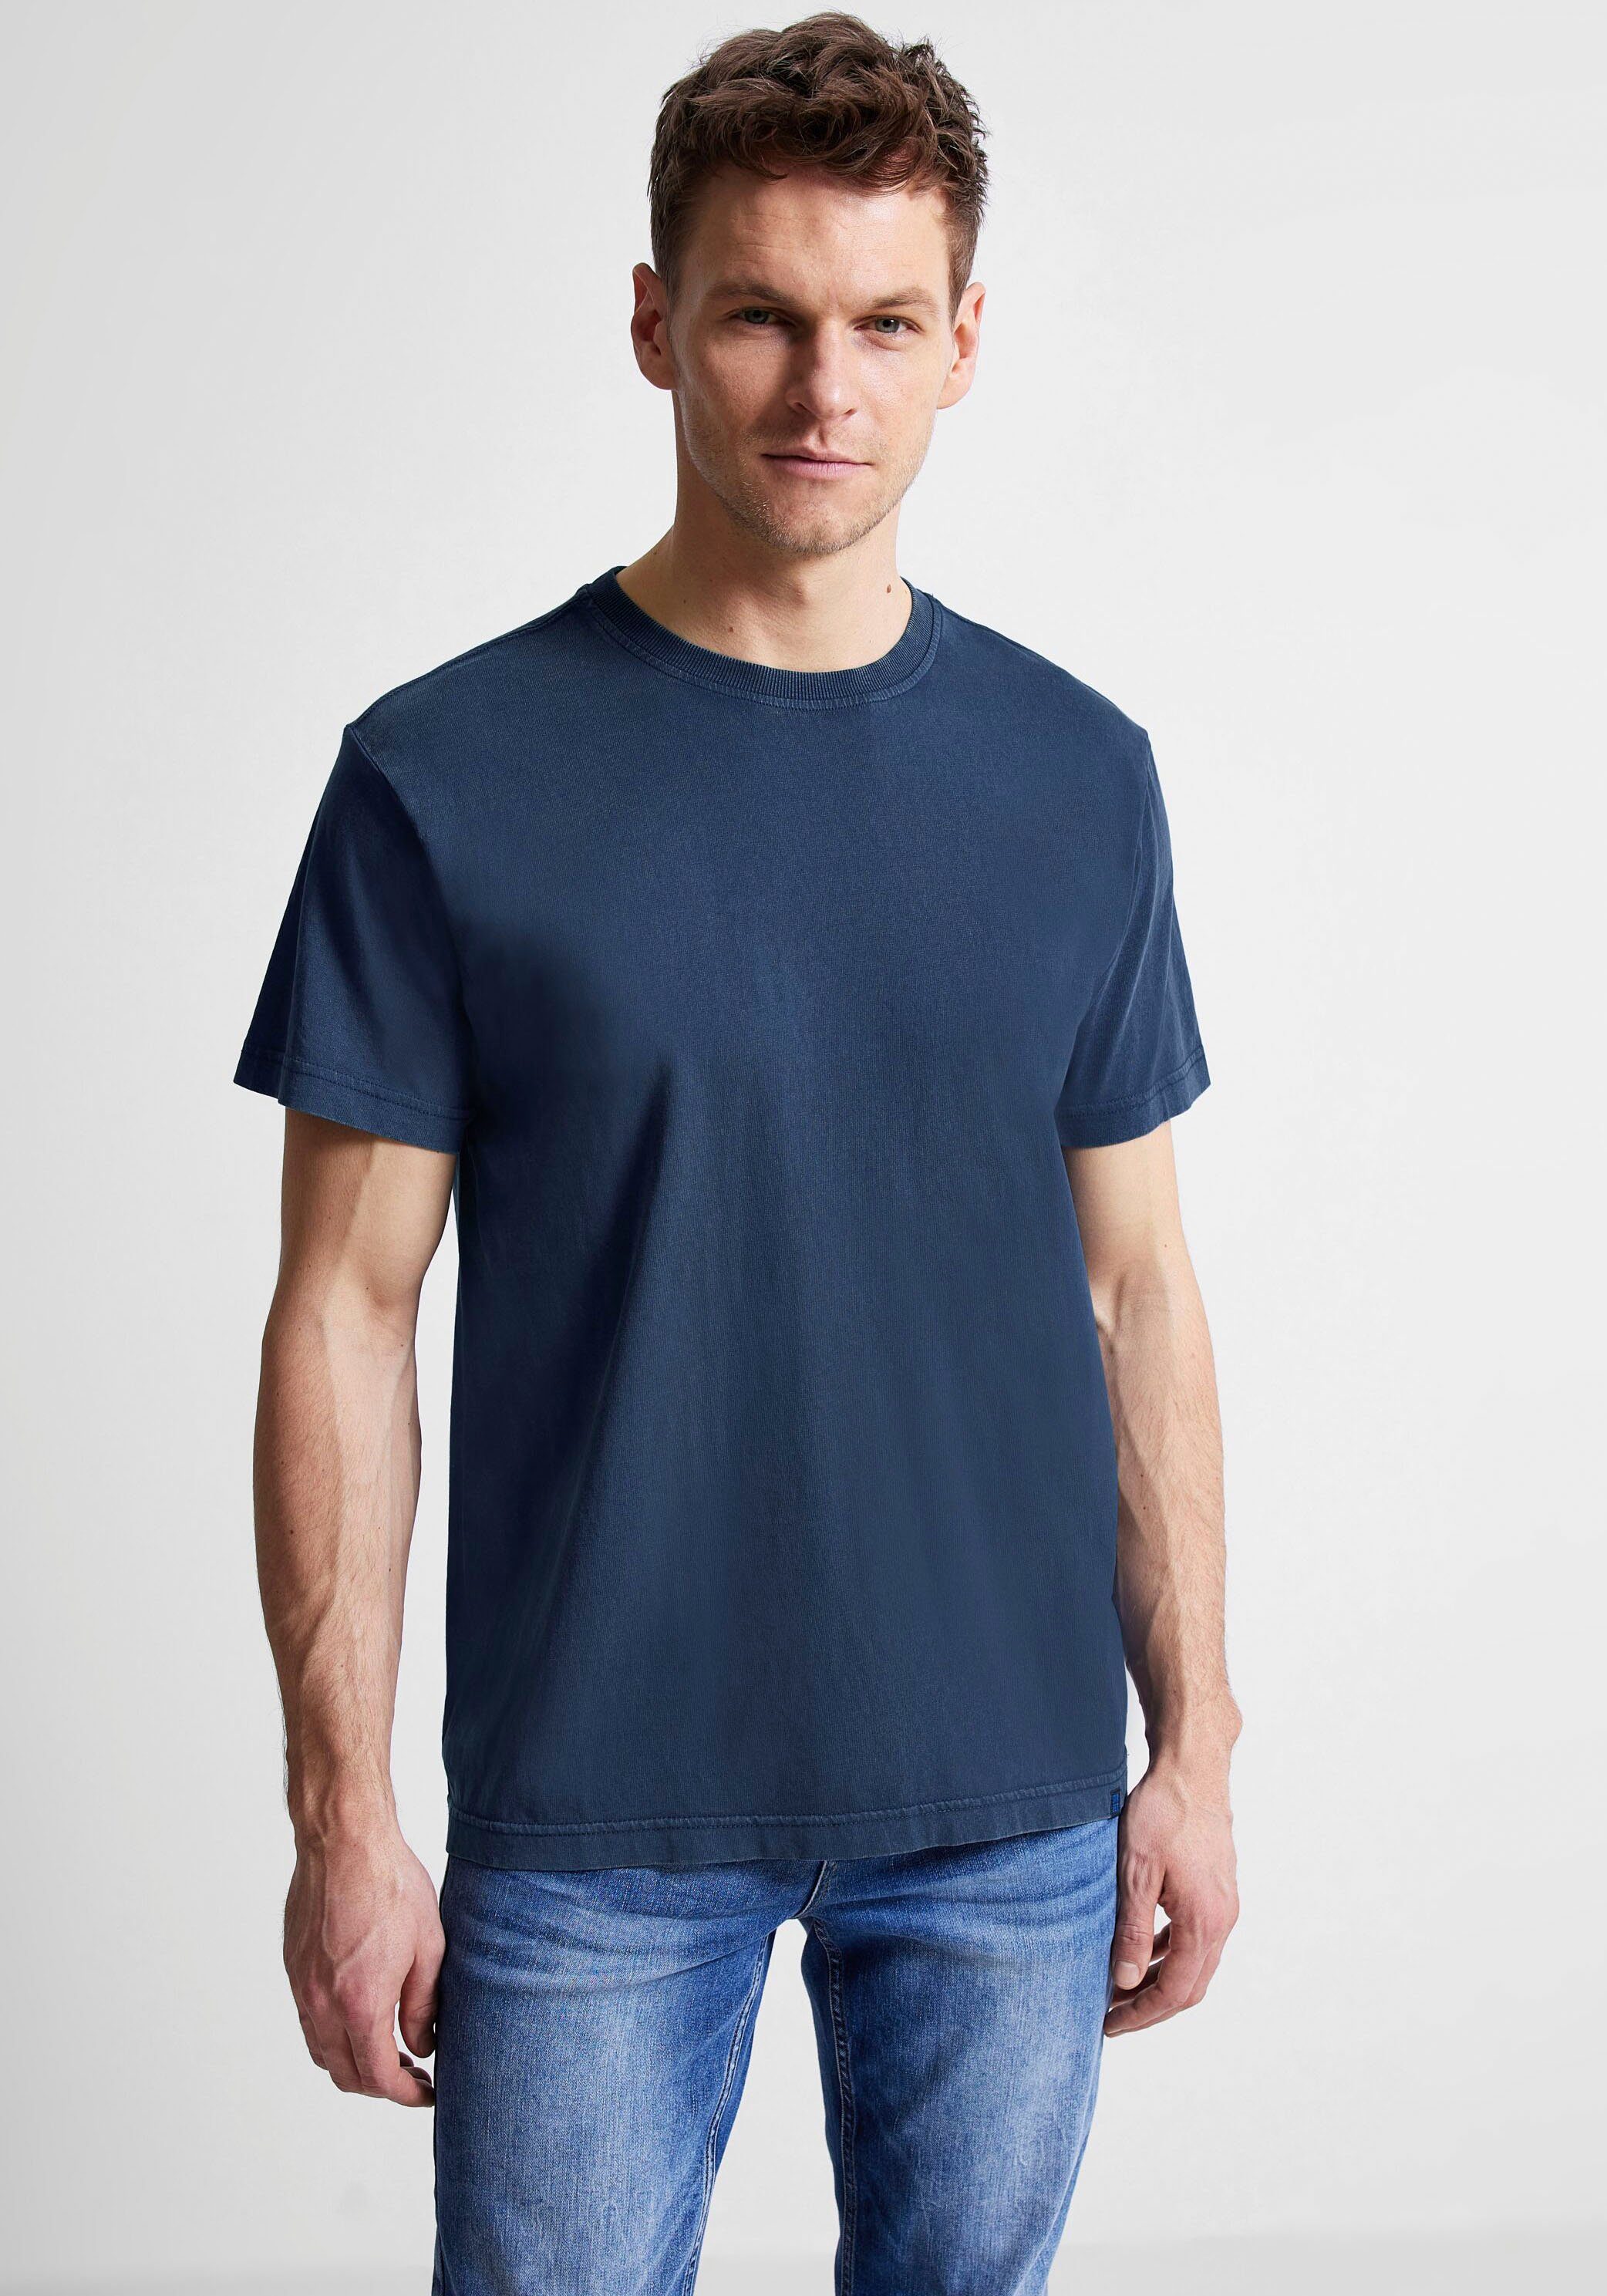 STREET ONE MEN T-shirt met lengte die heupen bedekt